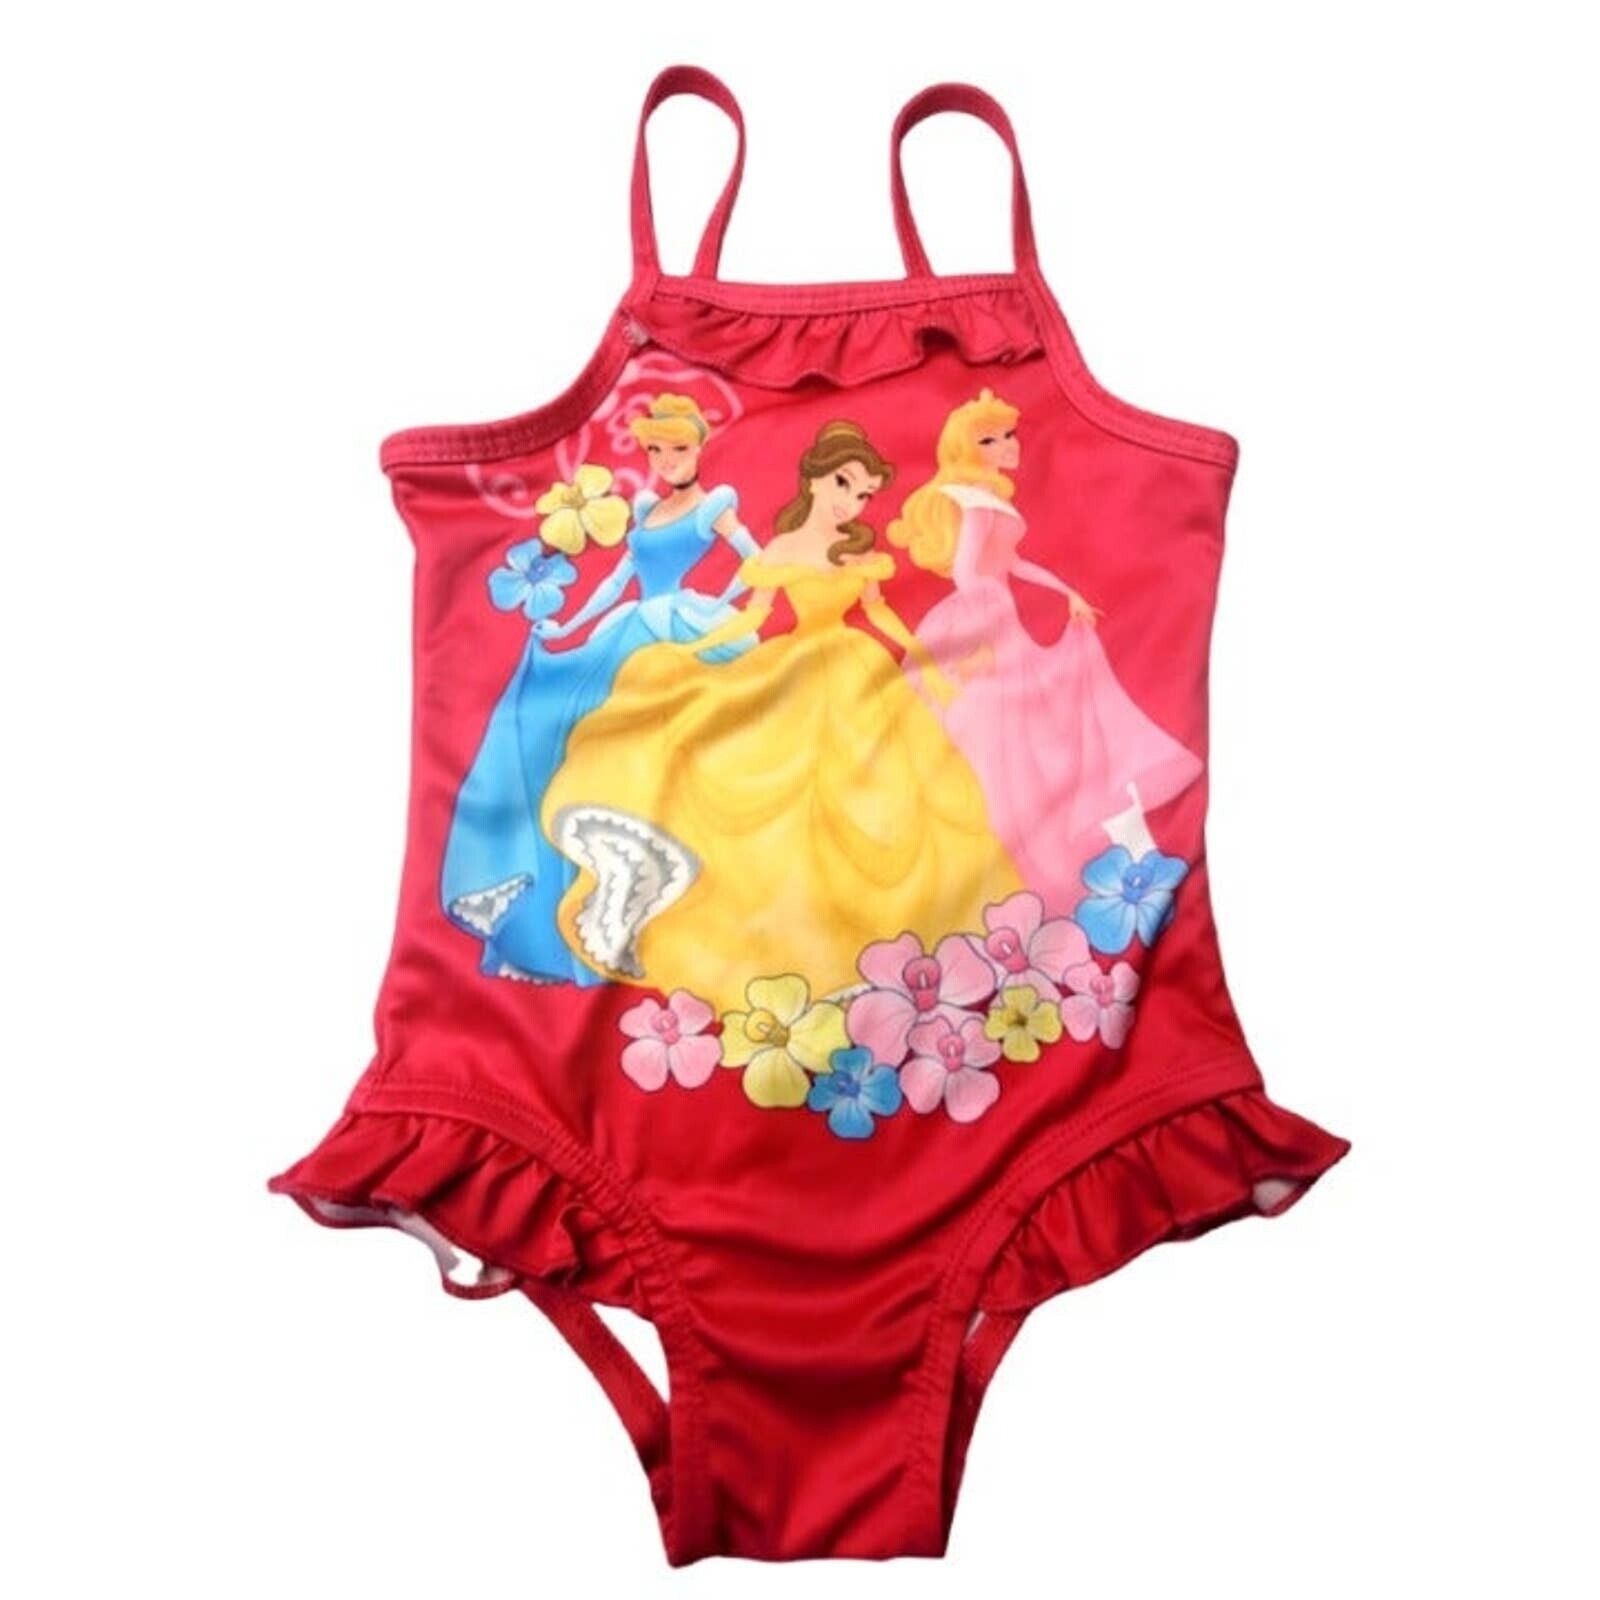 Disney Princess Girls 1-Pc Swimsuit 2T Red Princesses Graphic Ruffled Trim 2009 - $13.73